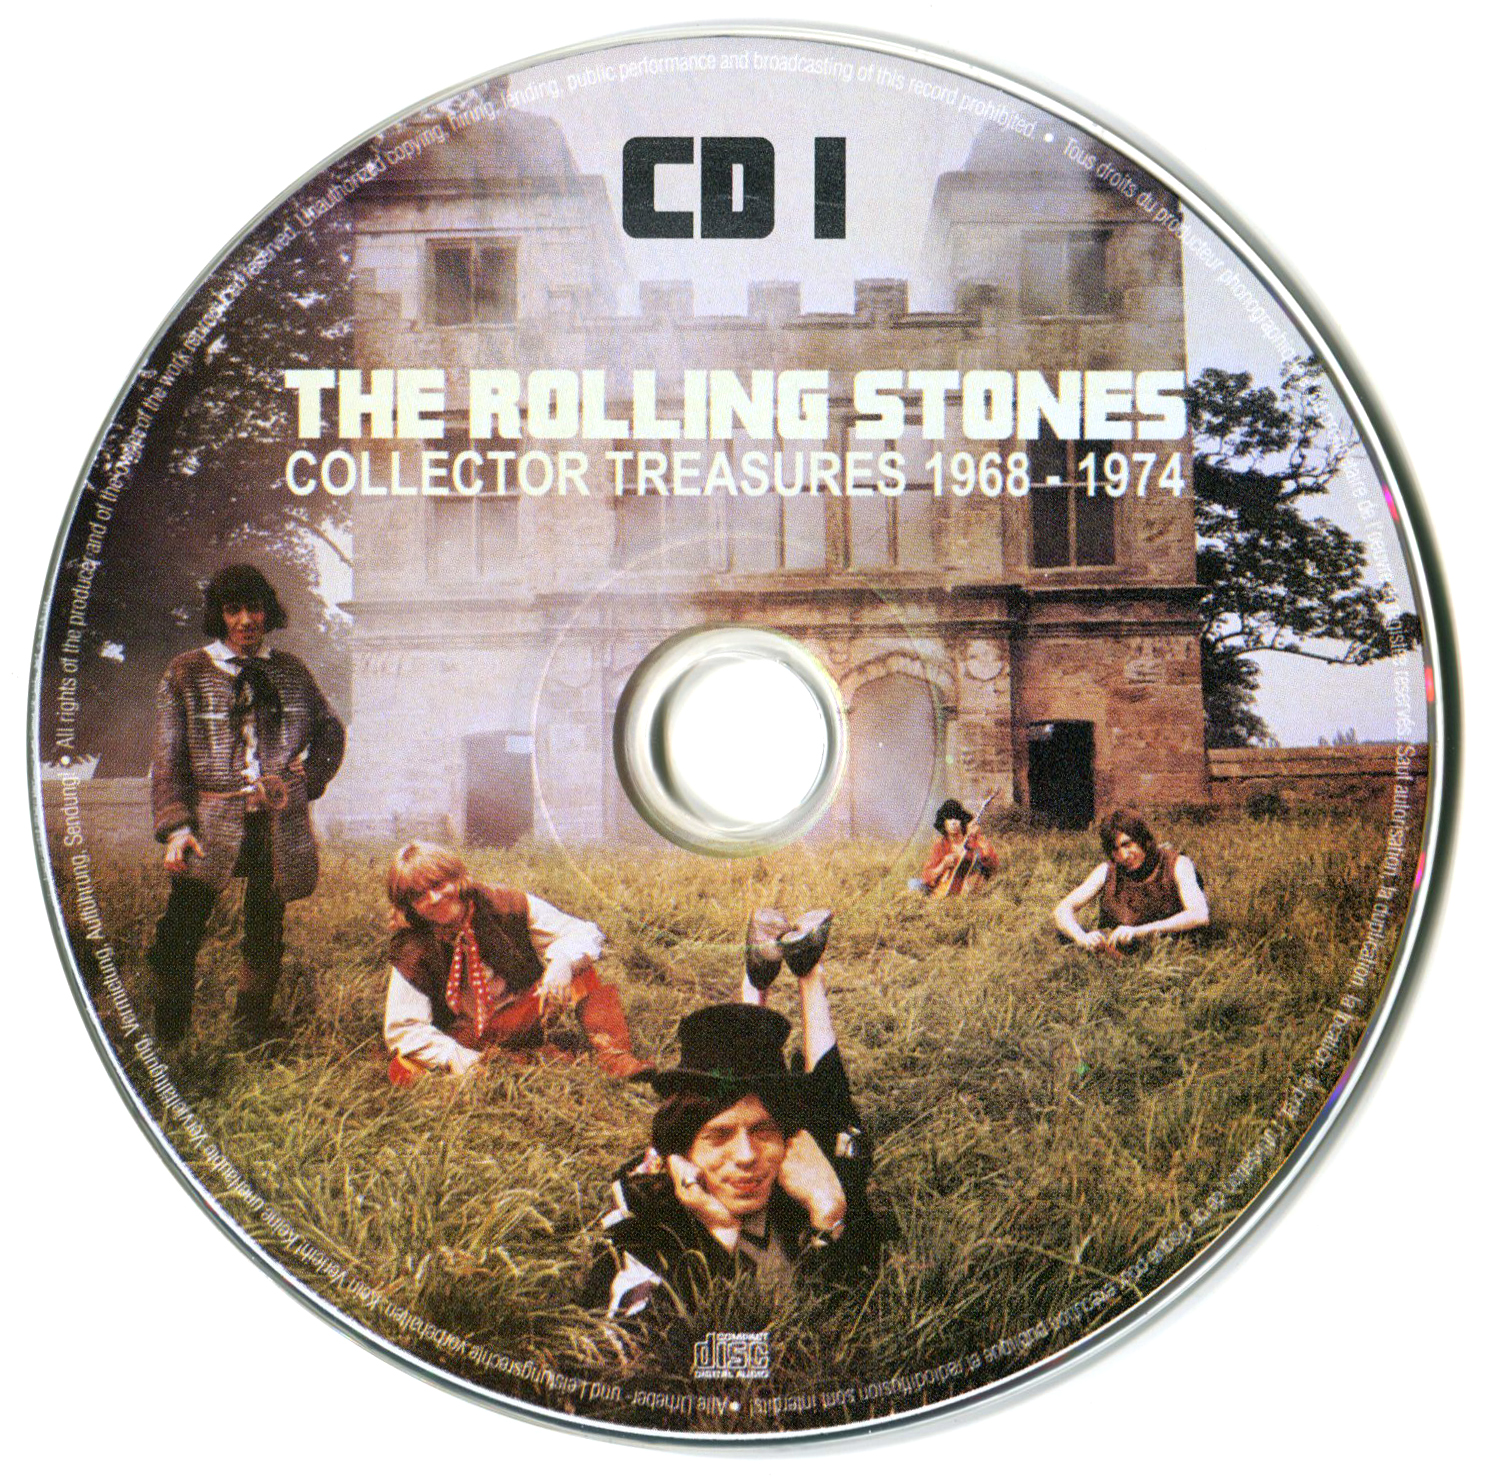 RollingStones1968-1974TheCollectorTreasuresVol10to13 (13).jpg